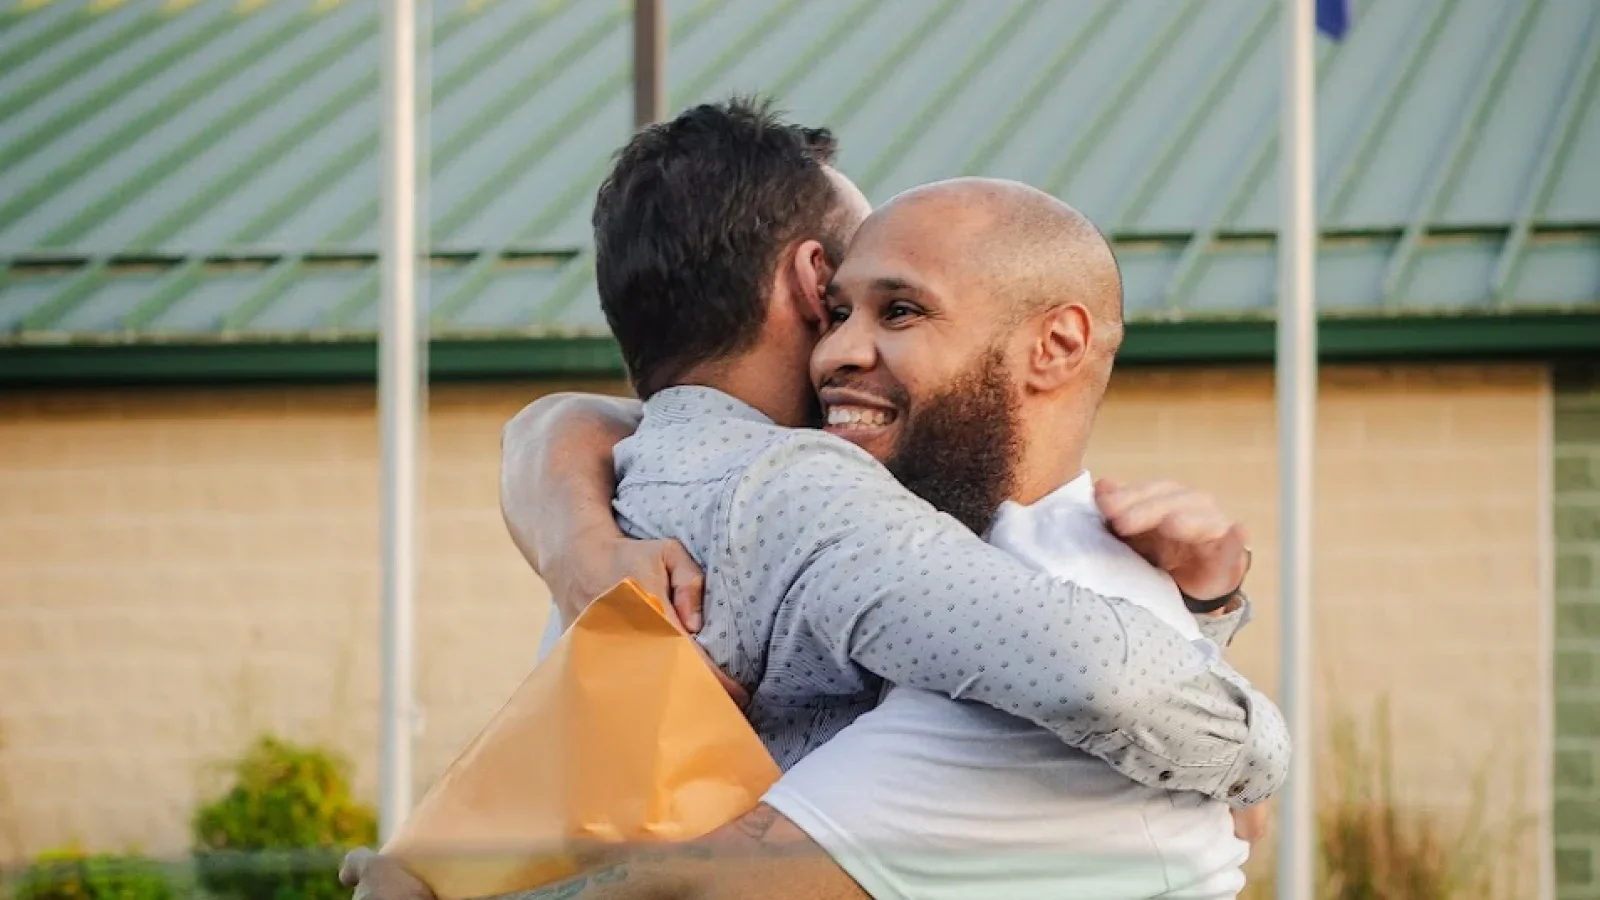 Edward Martinez embracing Marc Howard when he is released